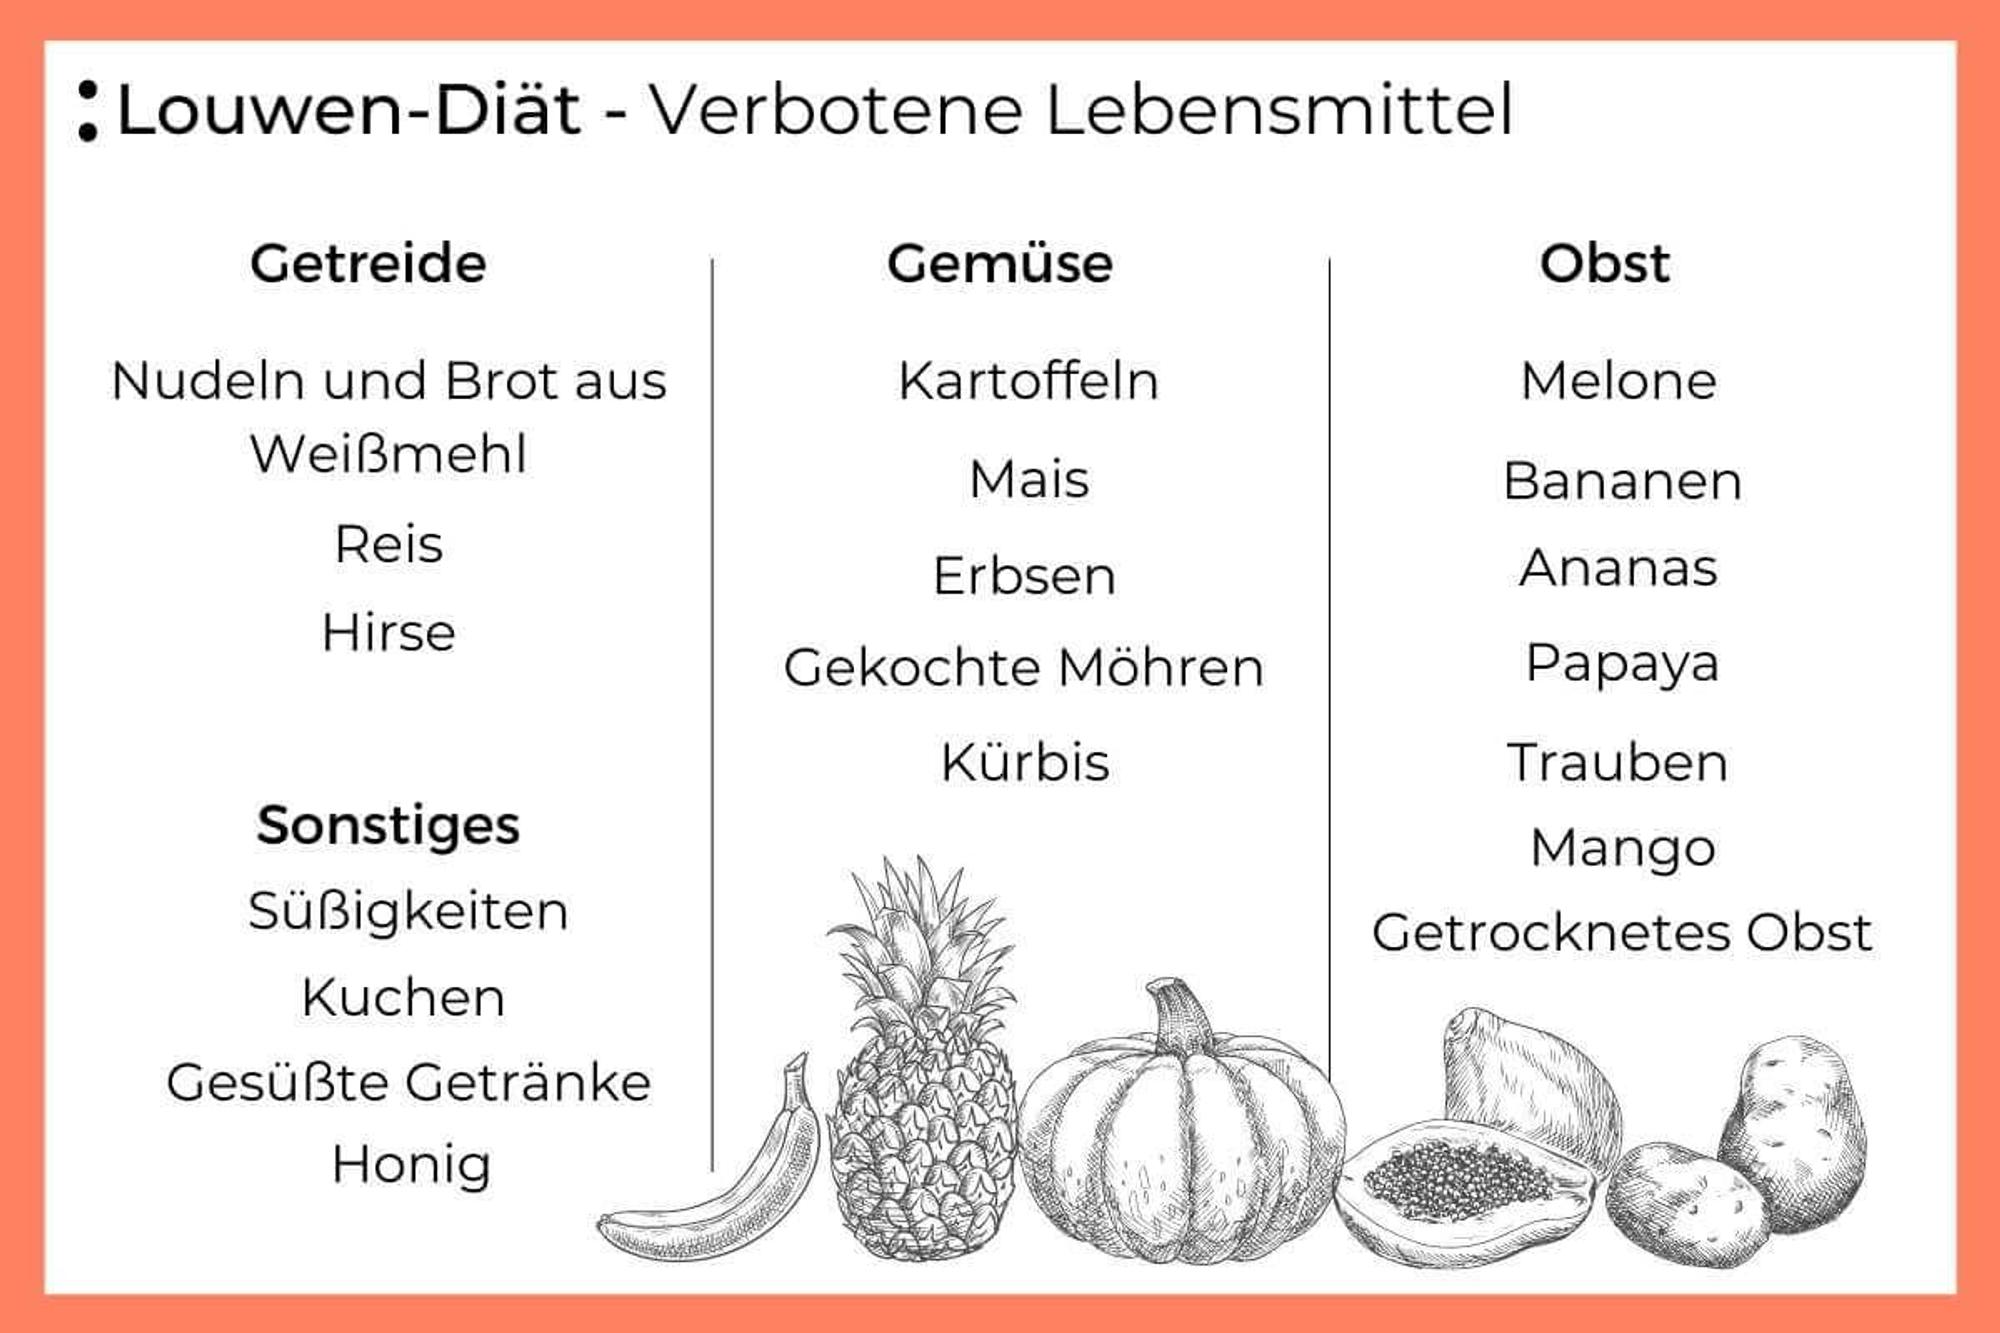 Louwen-Diät: Tabelle verbotener Lebensmittel